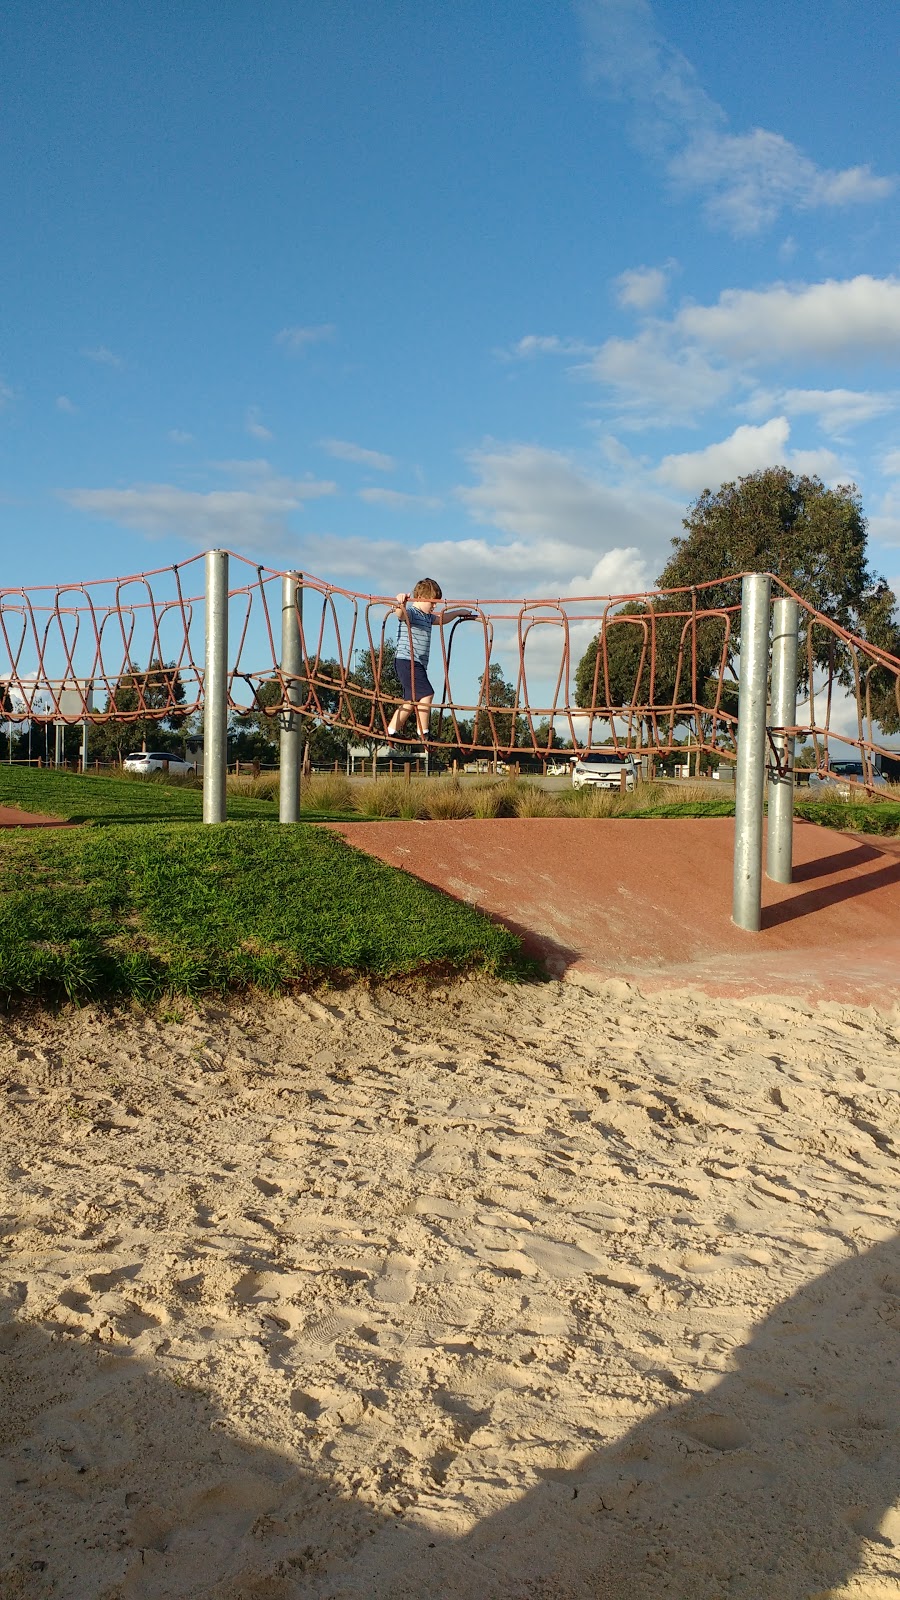 Casey Fields Playspace and Village Green | park | Cranbourne East VIC 3977, Australia